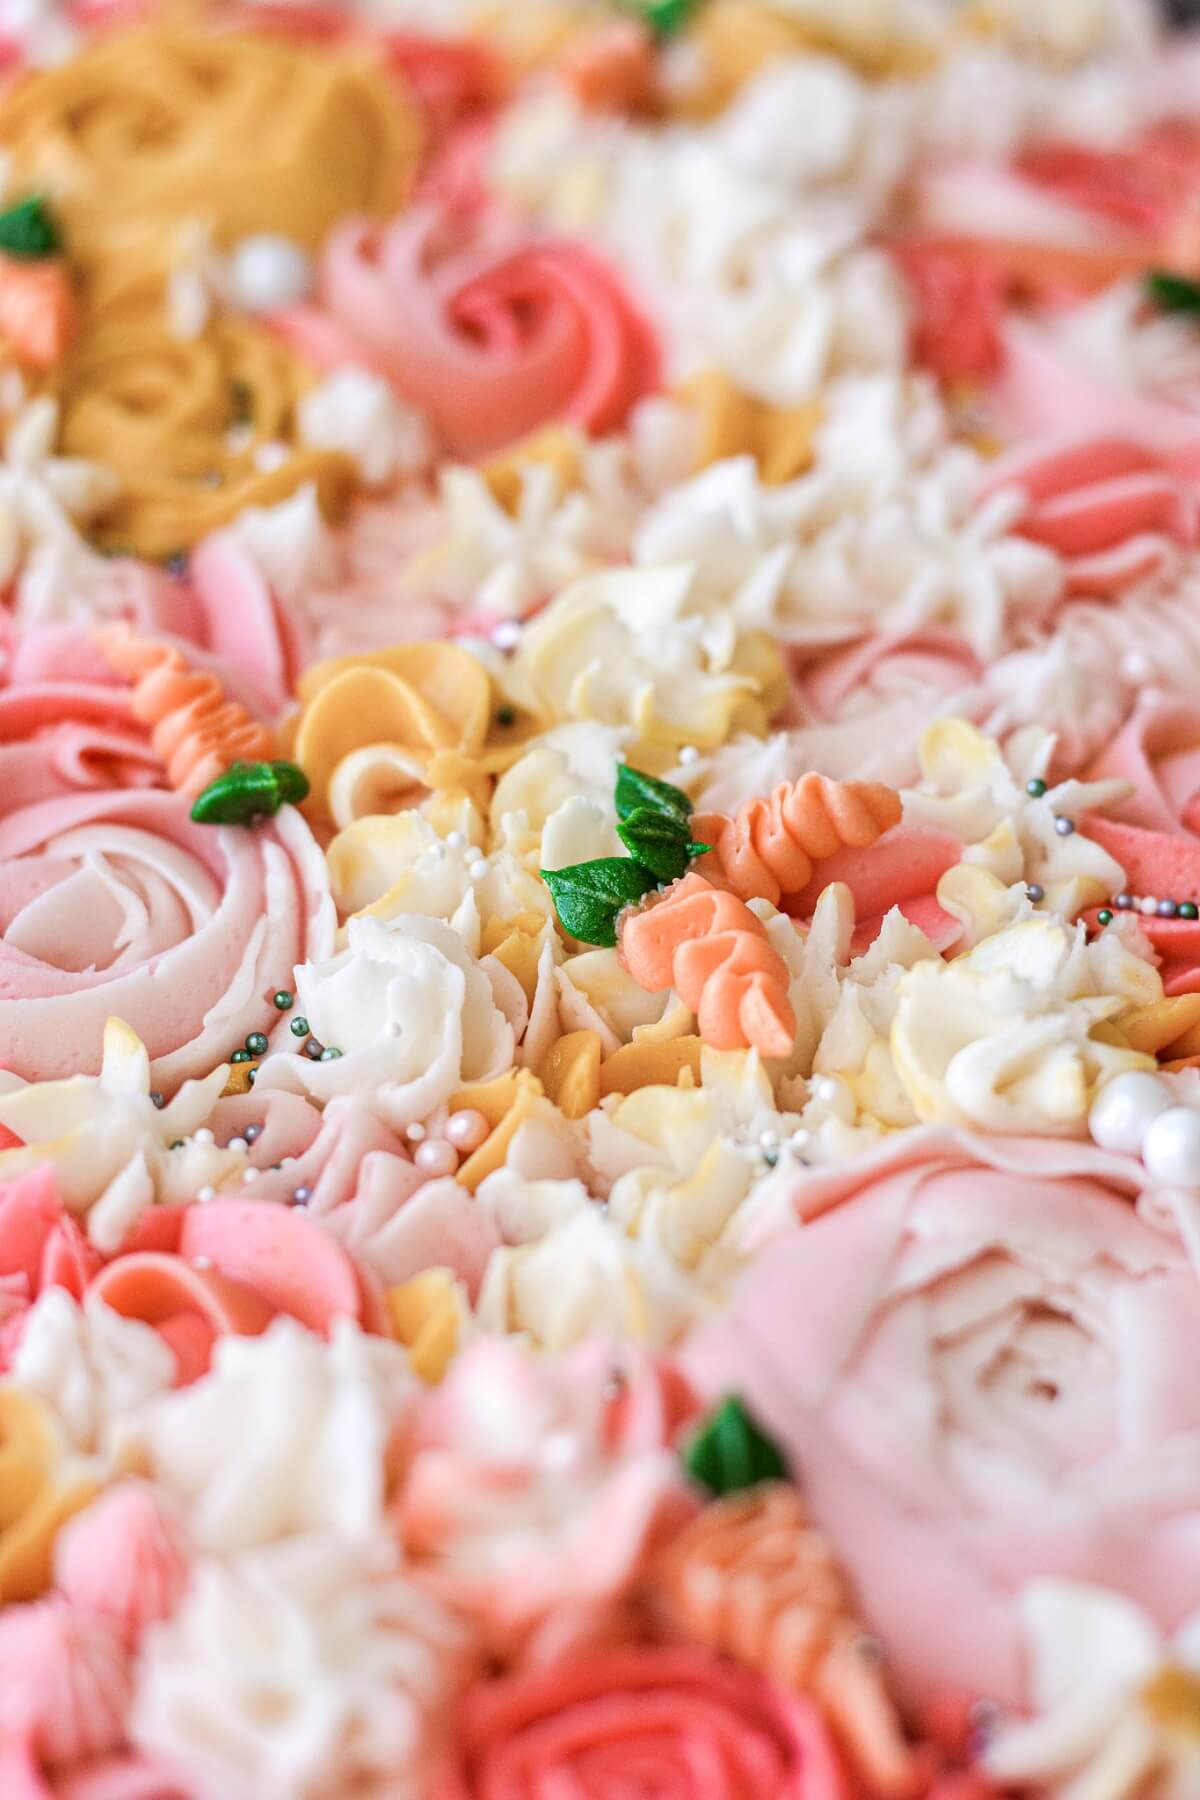 Buttercream flowers on a cake.